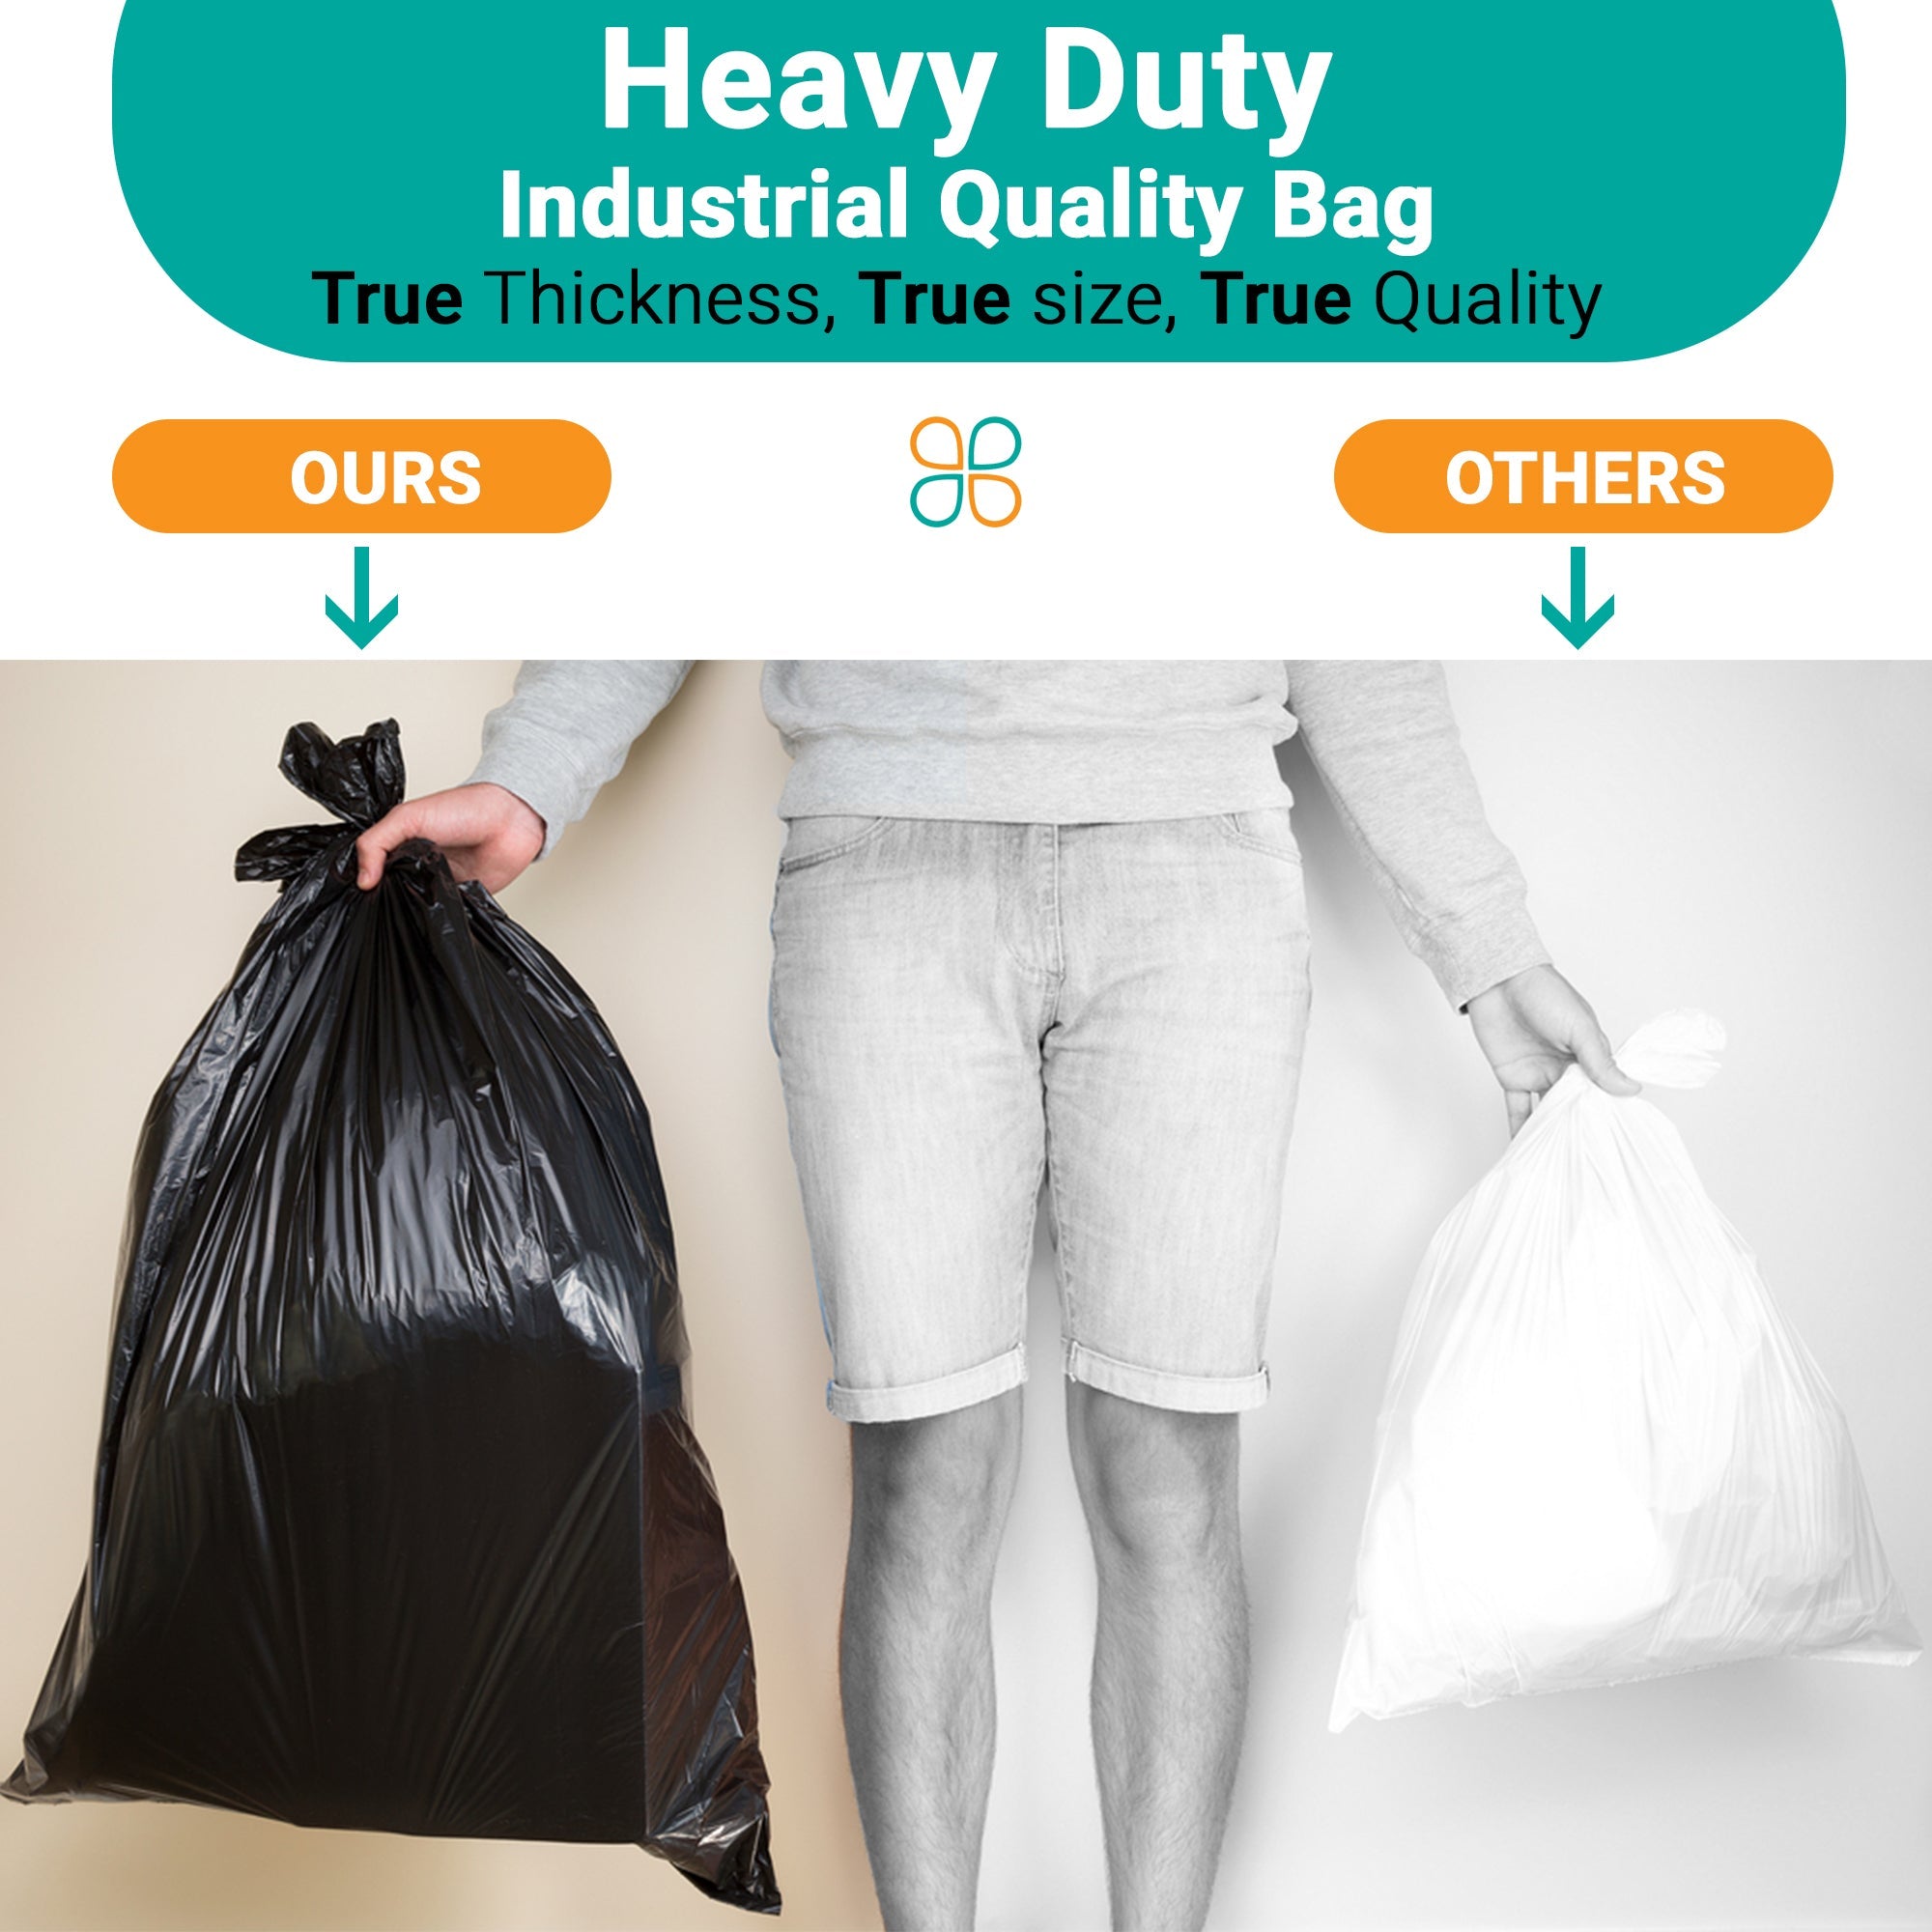 65 Gallon Industrial Trash Bags, 50 X 60” Large Black Garbage Bags